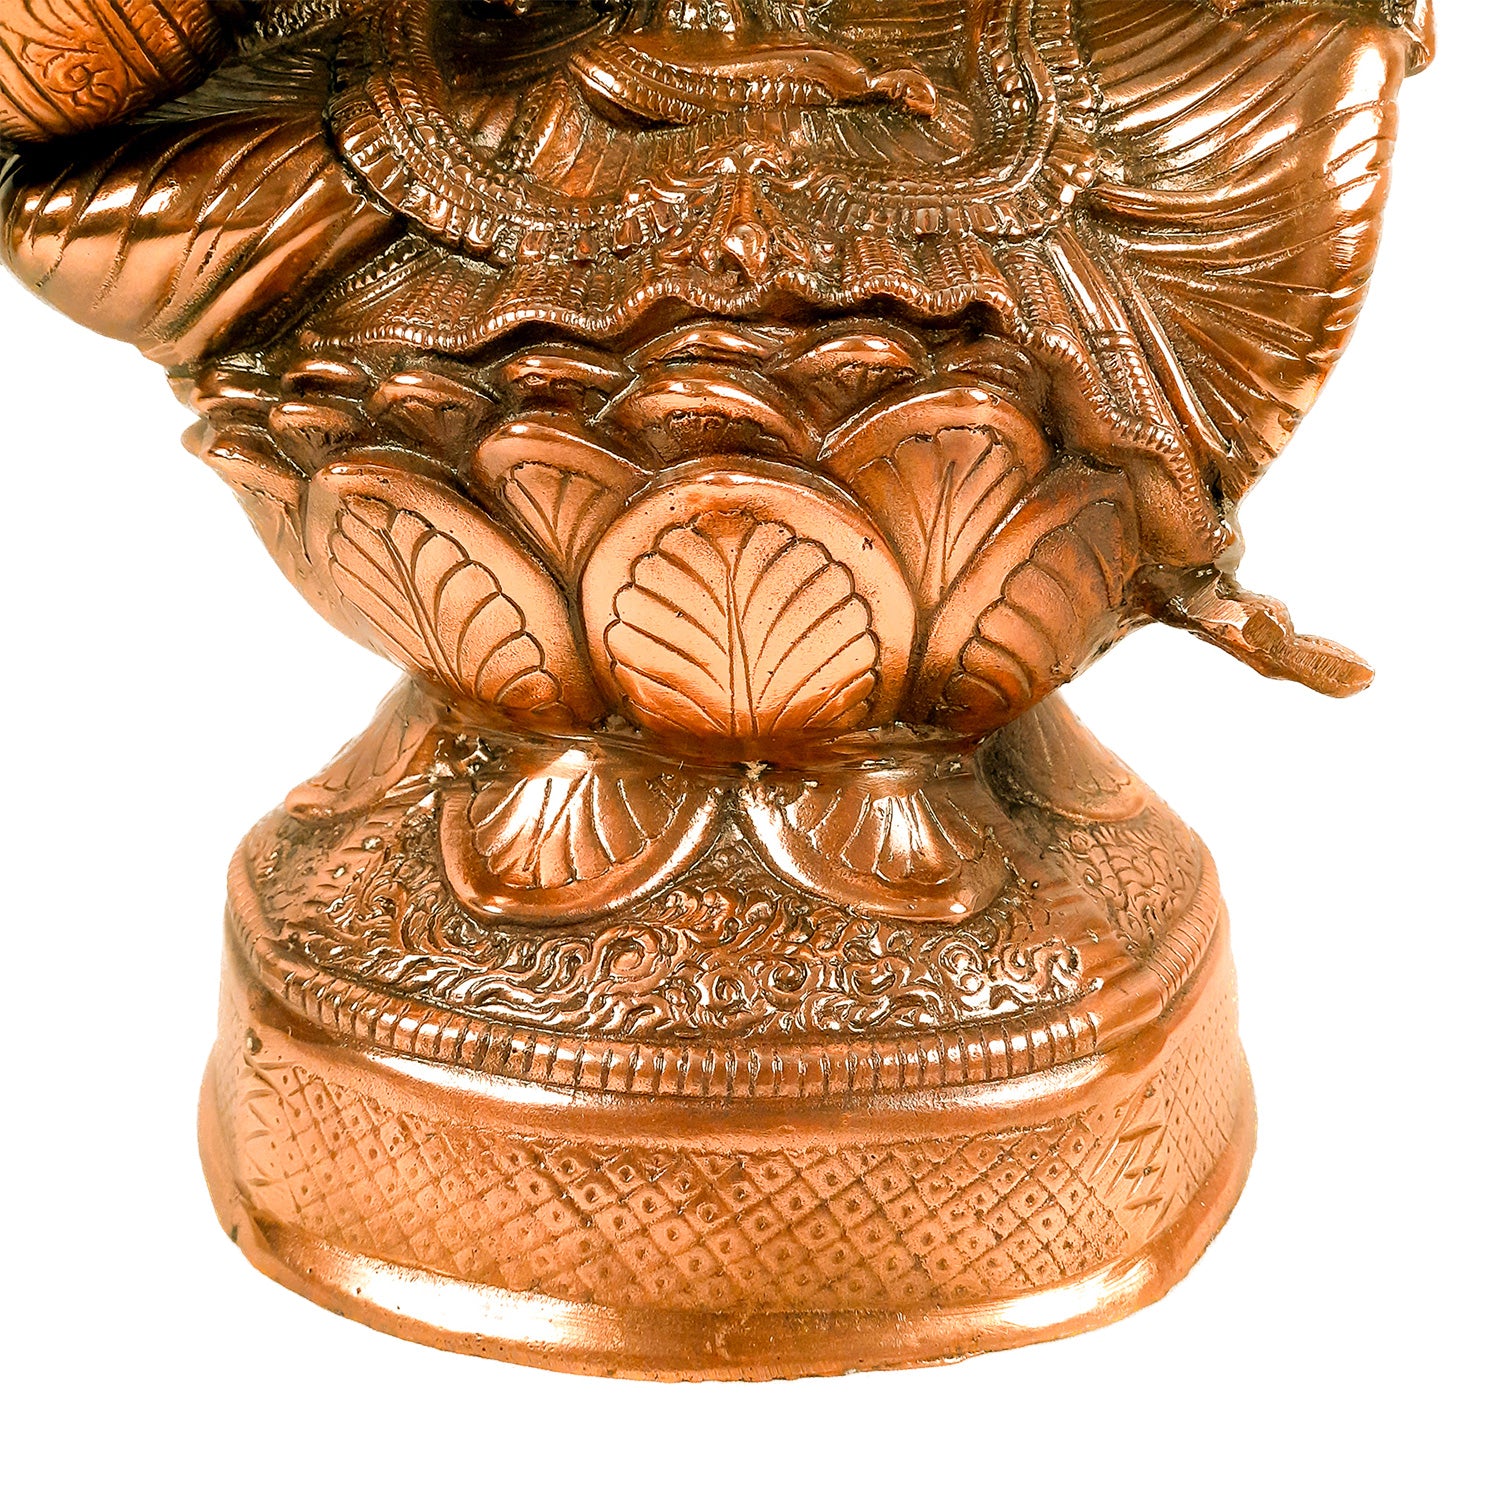 Saraswati Ji Statue | Goddess Sarasvati Idol- for Home, Puja, Temple, Office, Religious Decor & Gifts - Apkamart